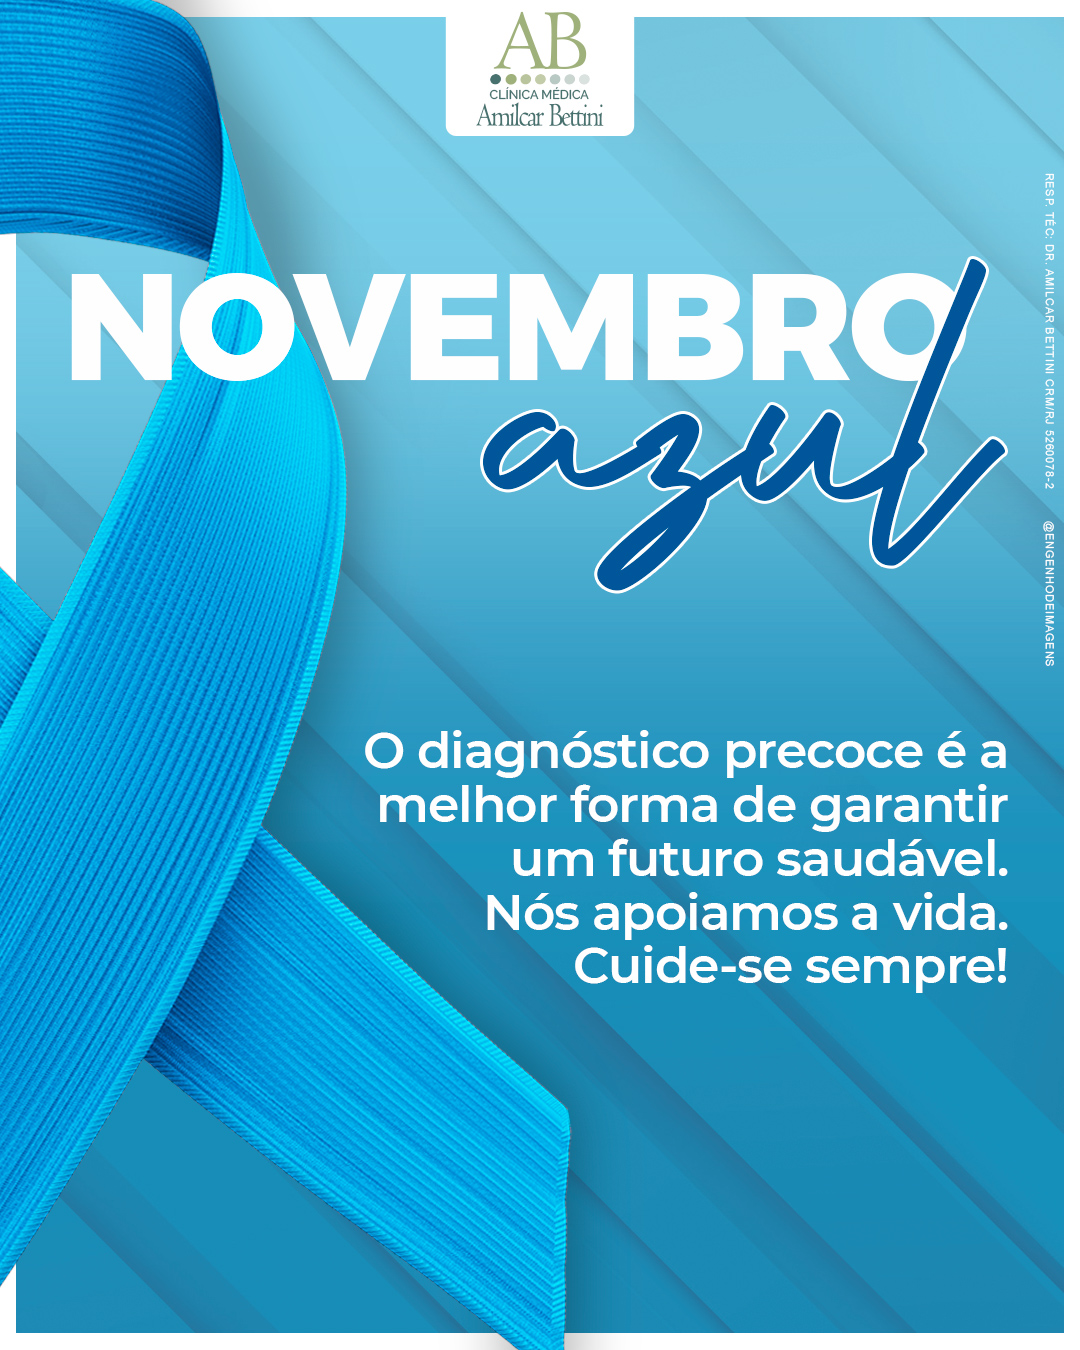 Novembro azul: Abraçando o cuidado com a saúde masculina!